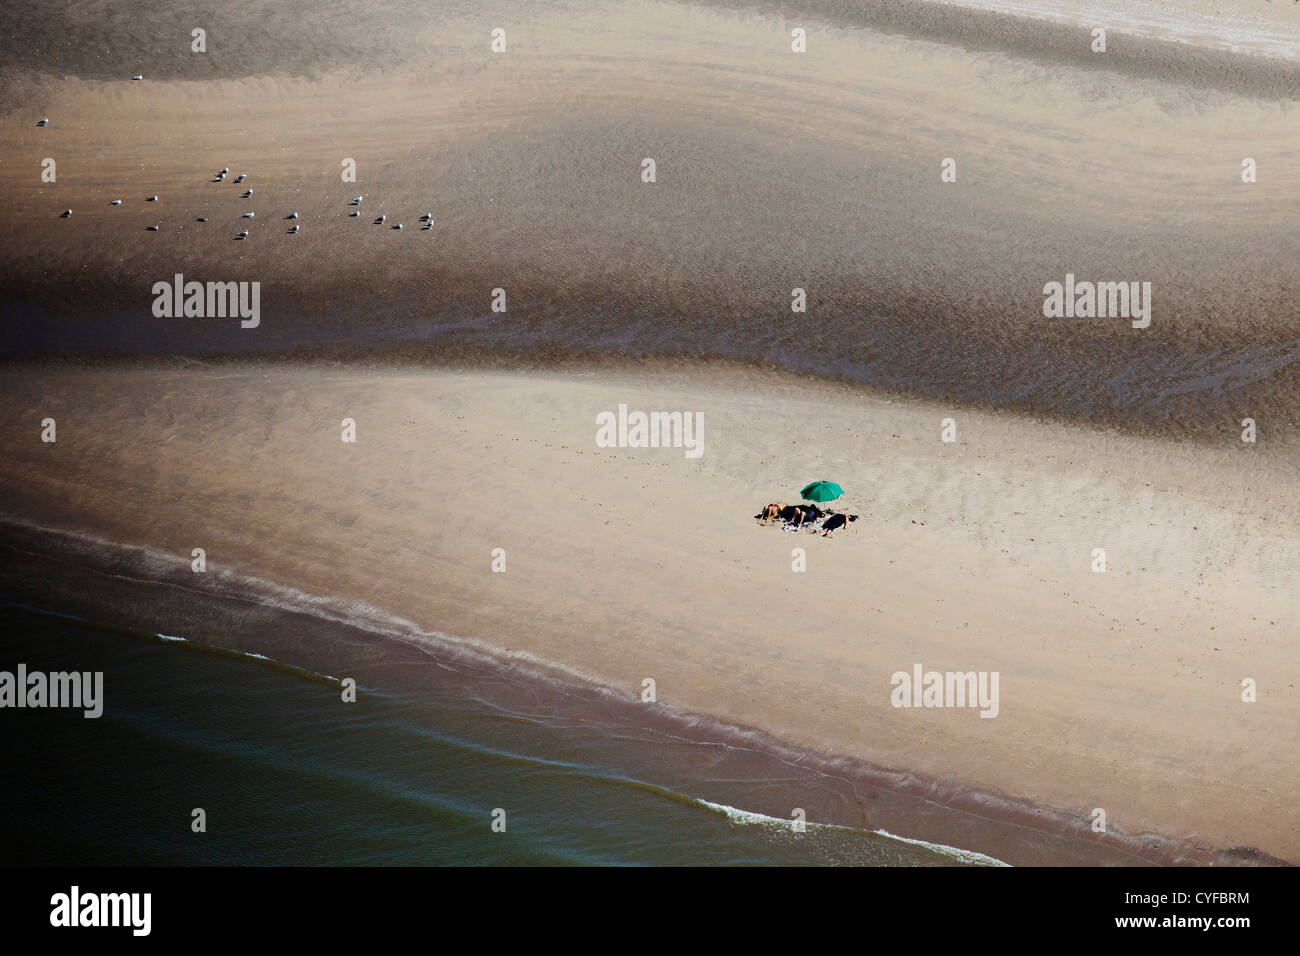 The Netherlands, Monster, Ter Heijde. People sunbathing on beach of North Sea. Aerial. Stock Photo